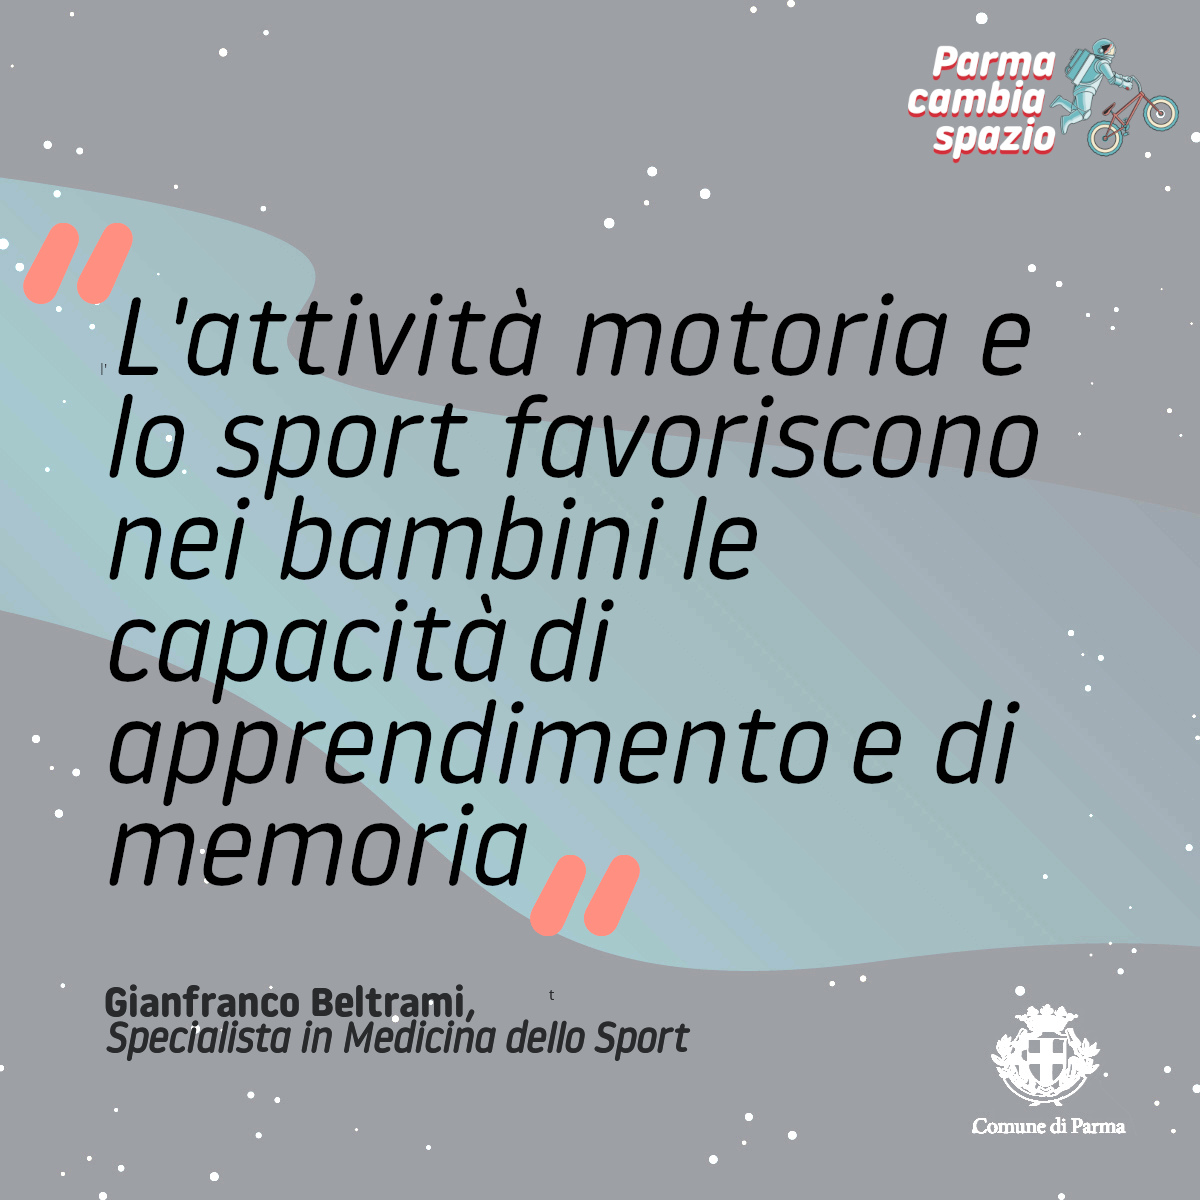 Parma Cambia Spazio - card G. Beltrami